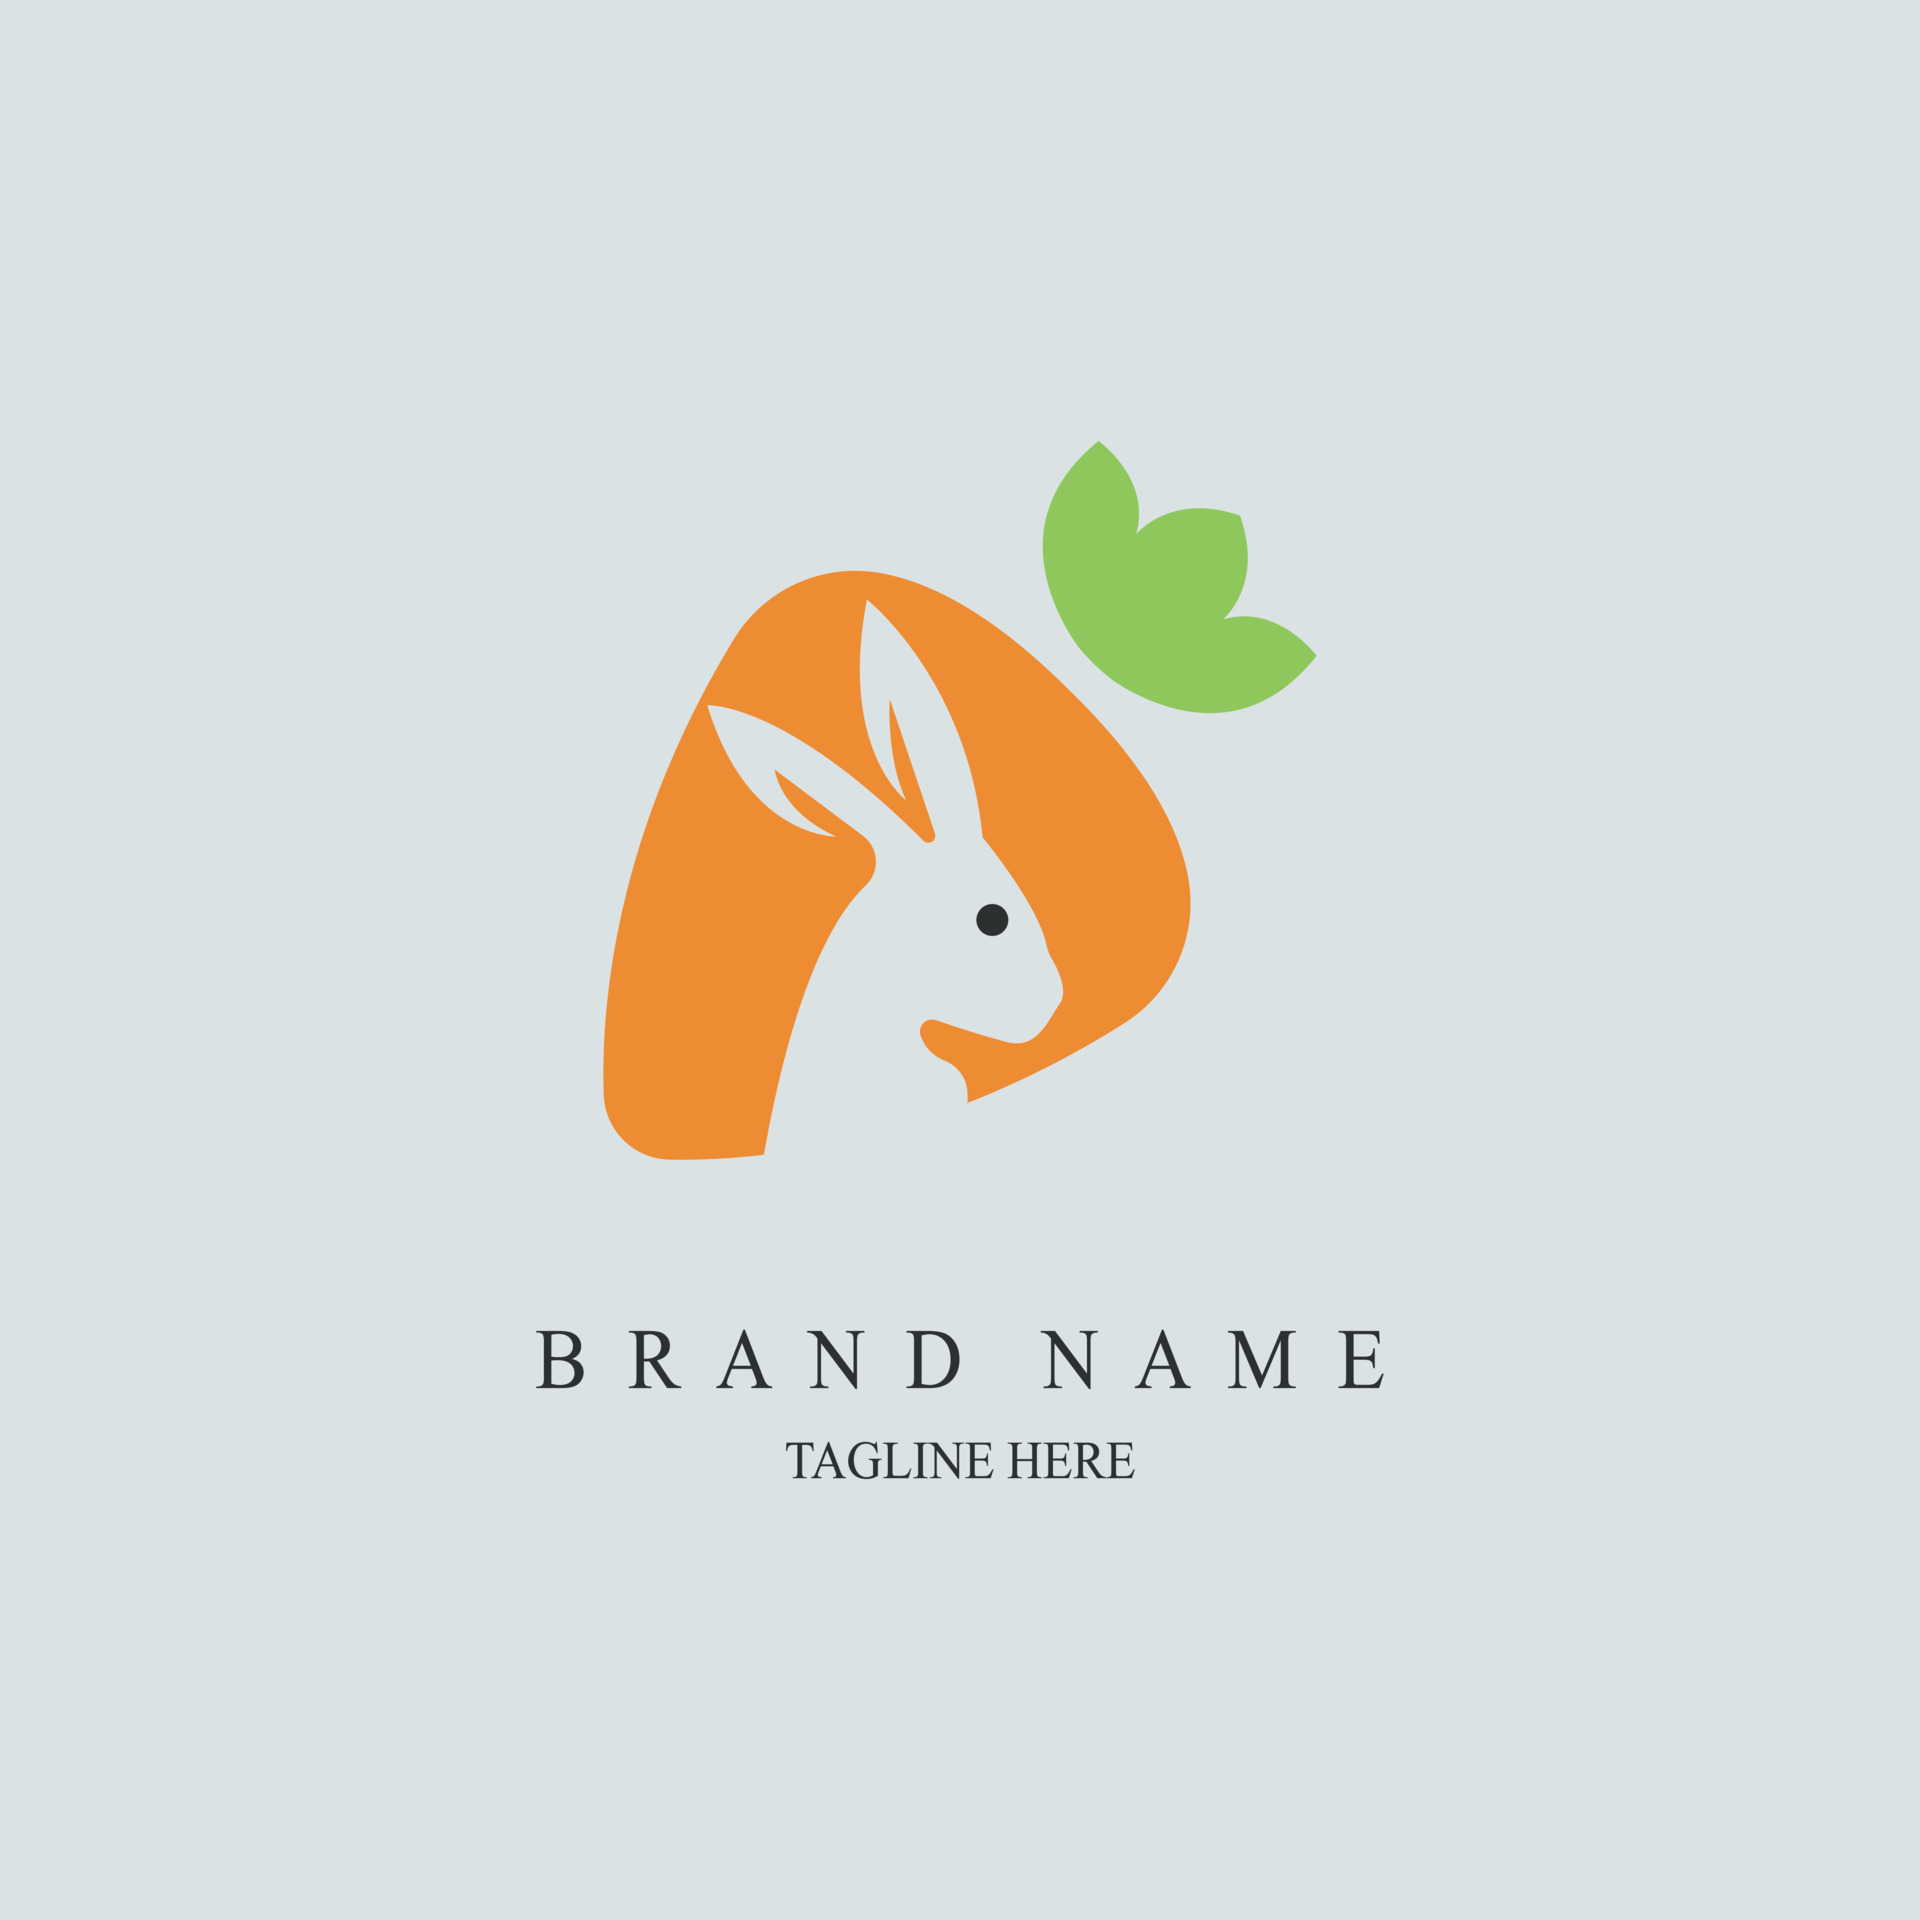 Rabbit Logo Maker | Create a Rabbit Logo | Fiverr